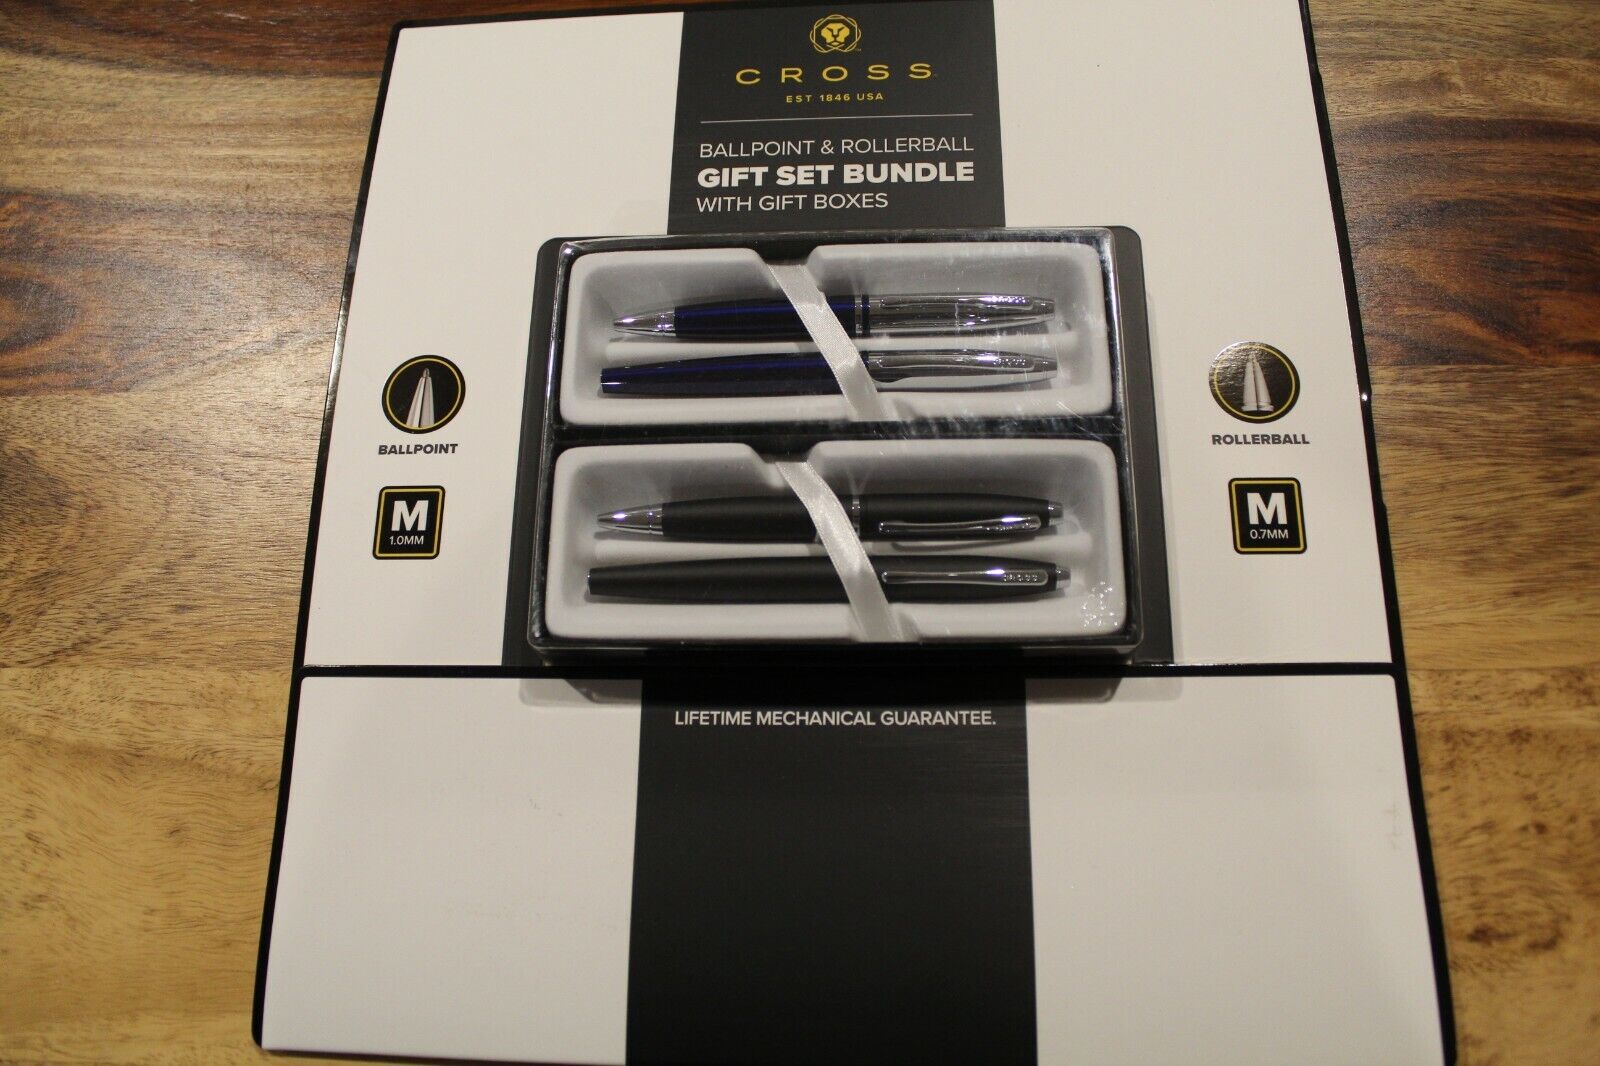 New/Sealed CROSS CALAIS Gift Set Bundle (2) Ballpoint & Rollerball Pen Sets